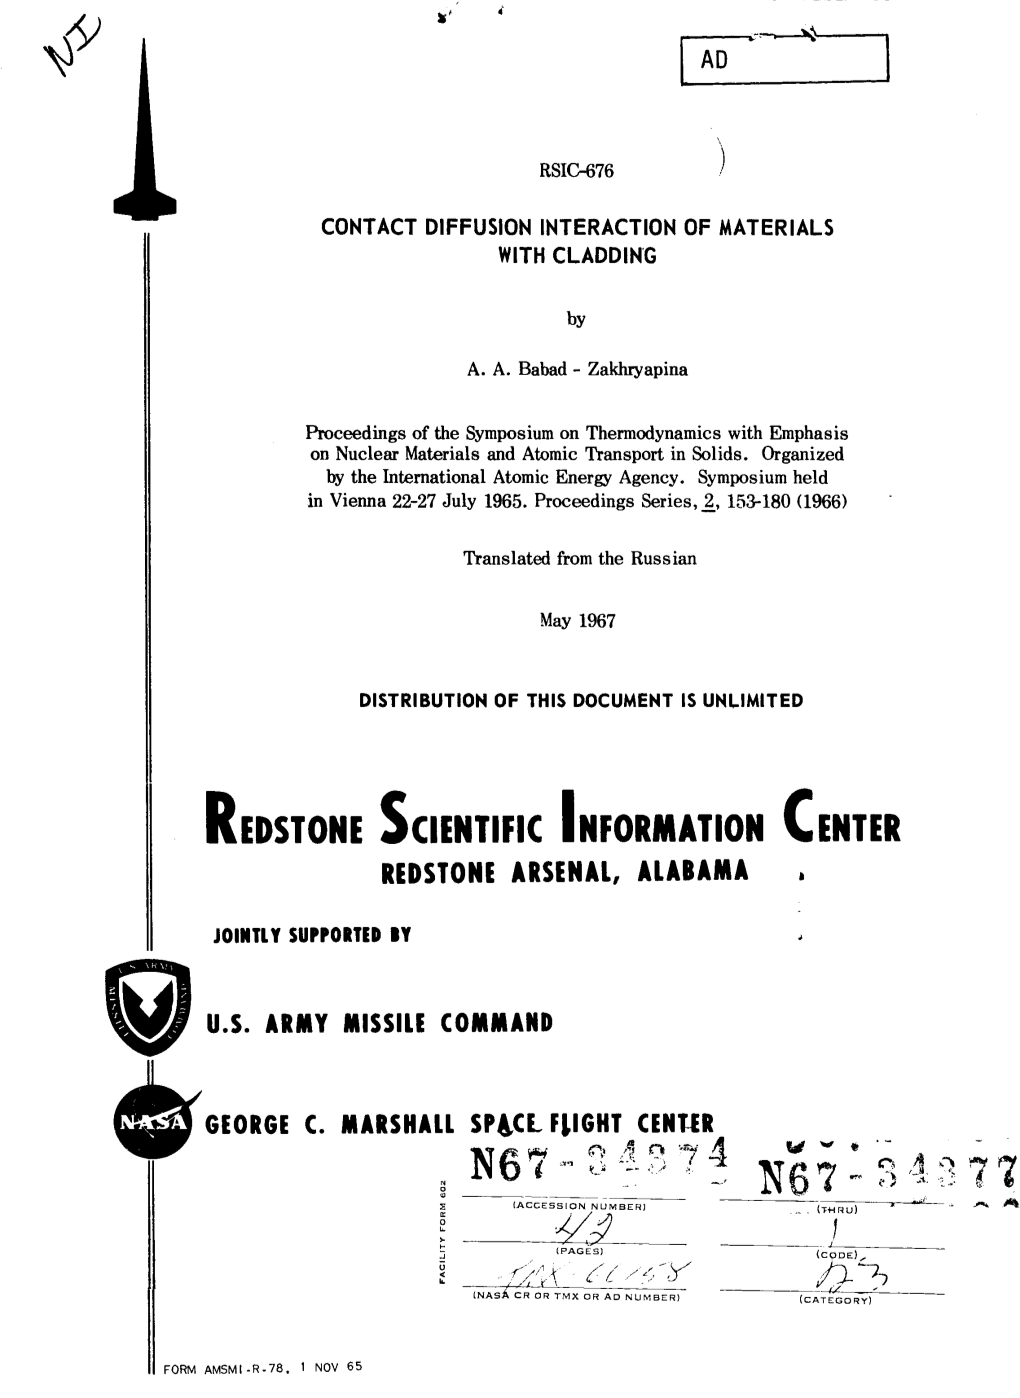 Redstone Scientific Information Center Research and Development Directorate U